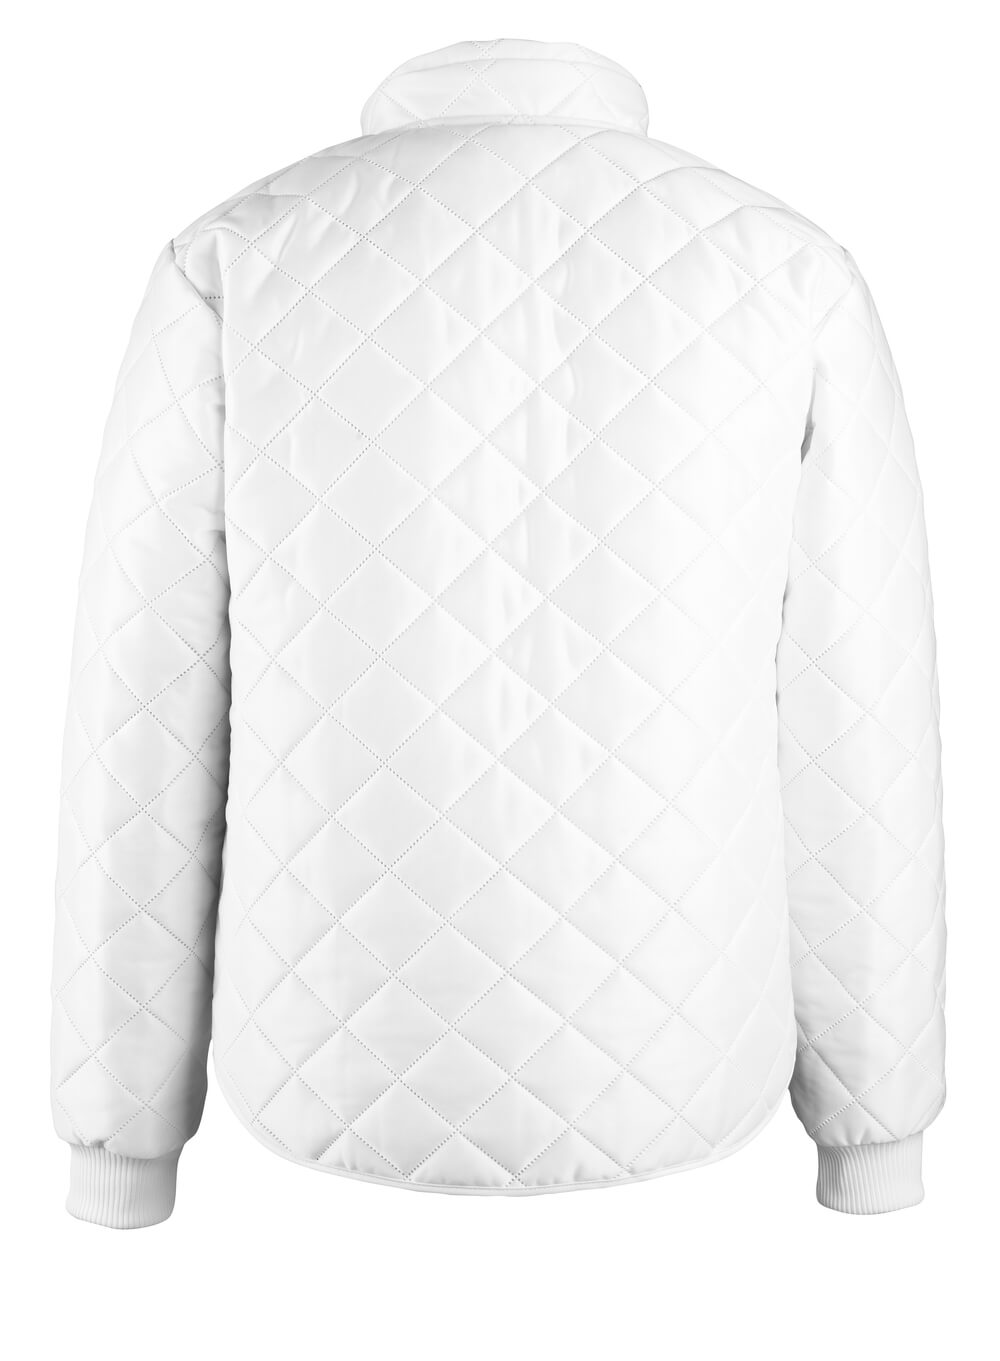 Mascot ORIGINALS  Timmins Thermal jacket 13528 white